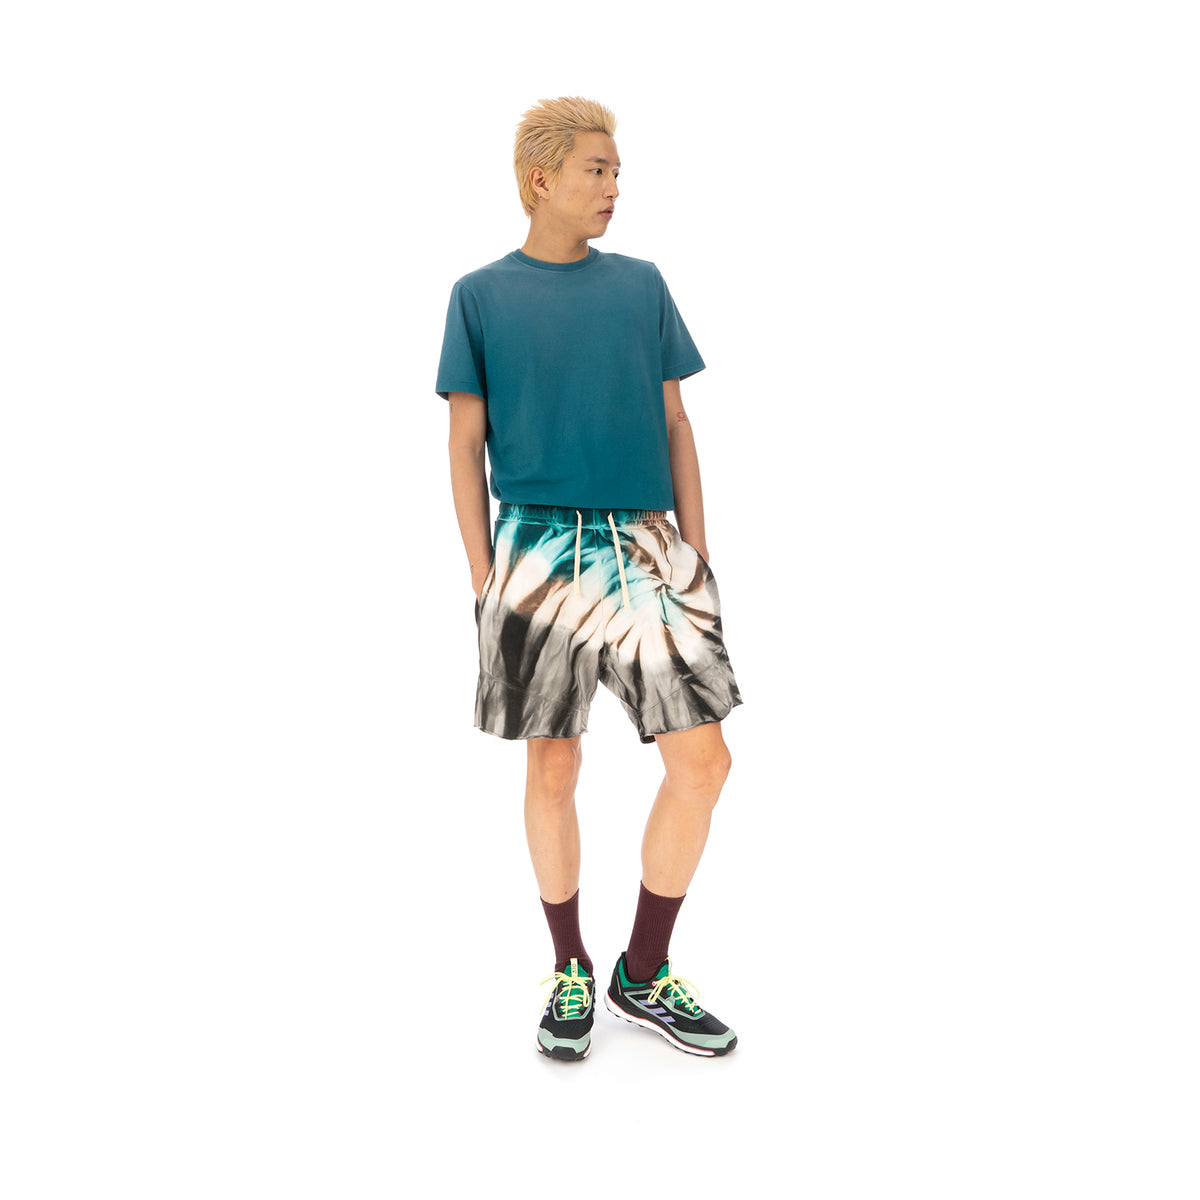 Danilo Paura | 'Donny' Embroidery Shorts Turquoise - Concrete